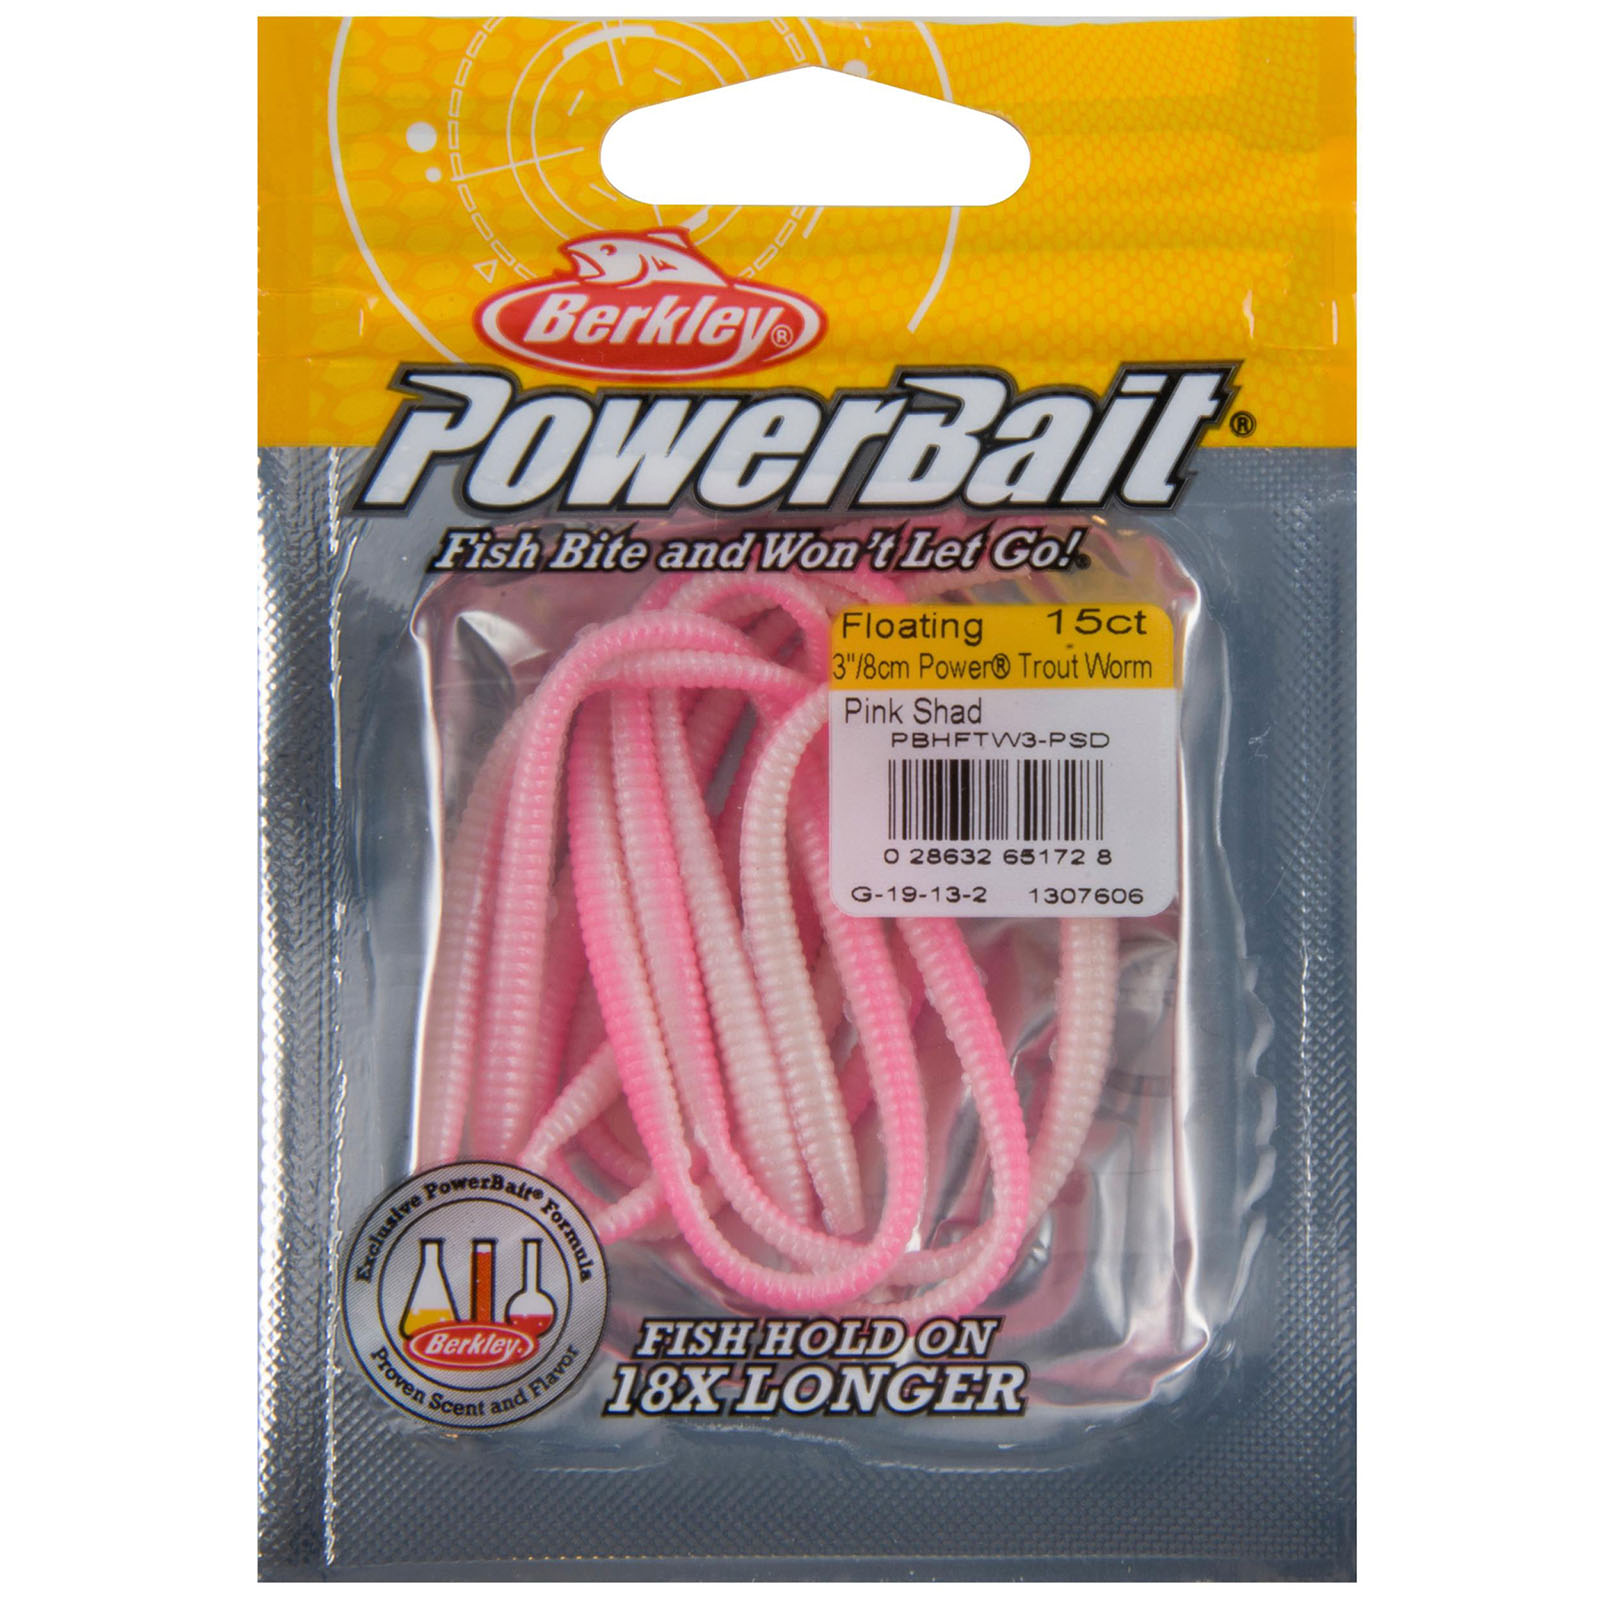 Berkley Powerbait Power Worms, Bass Powerbait